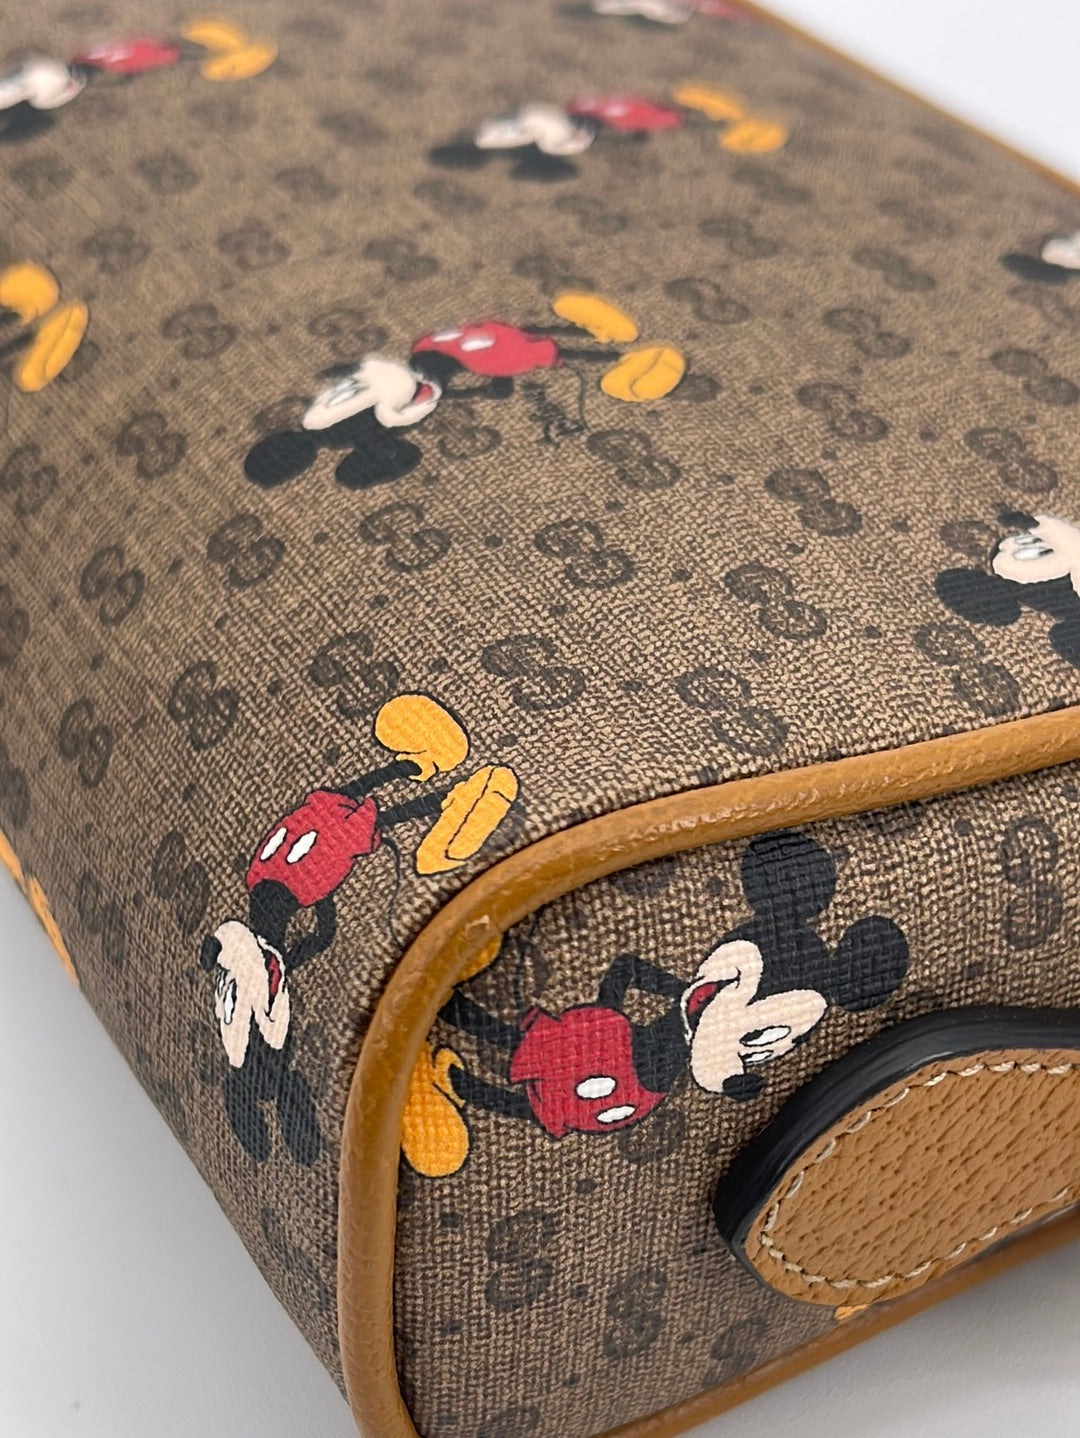 Gucci x Disney Micro GG Canvas Mickey Mouse Bucket Bag (SHF-23267